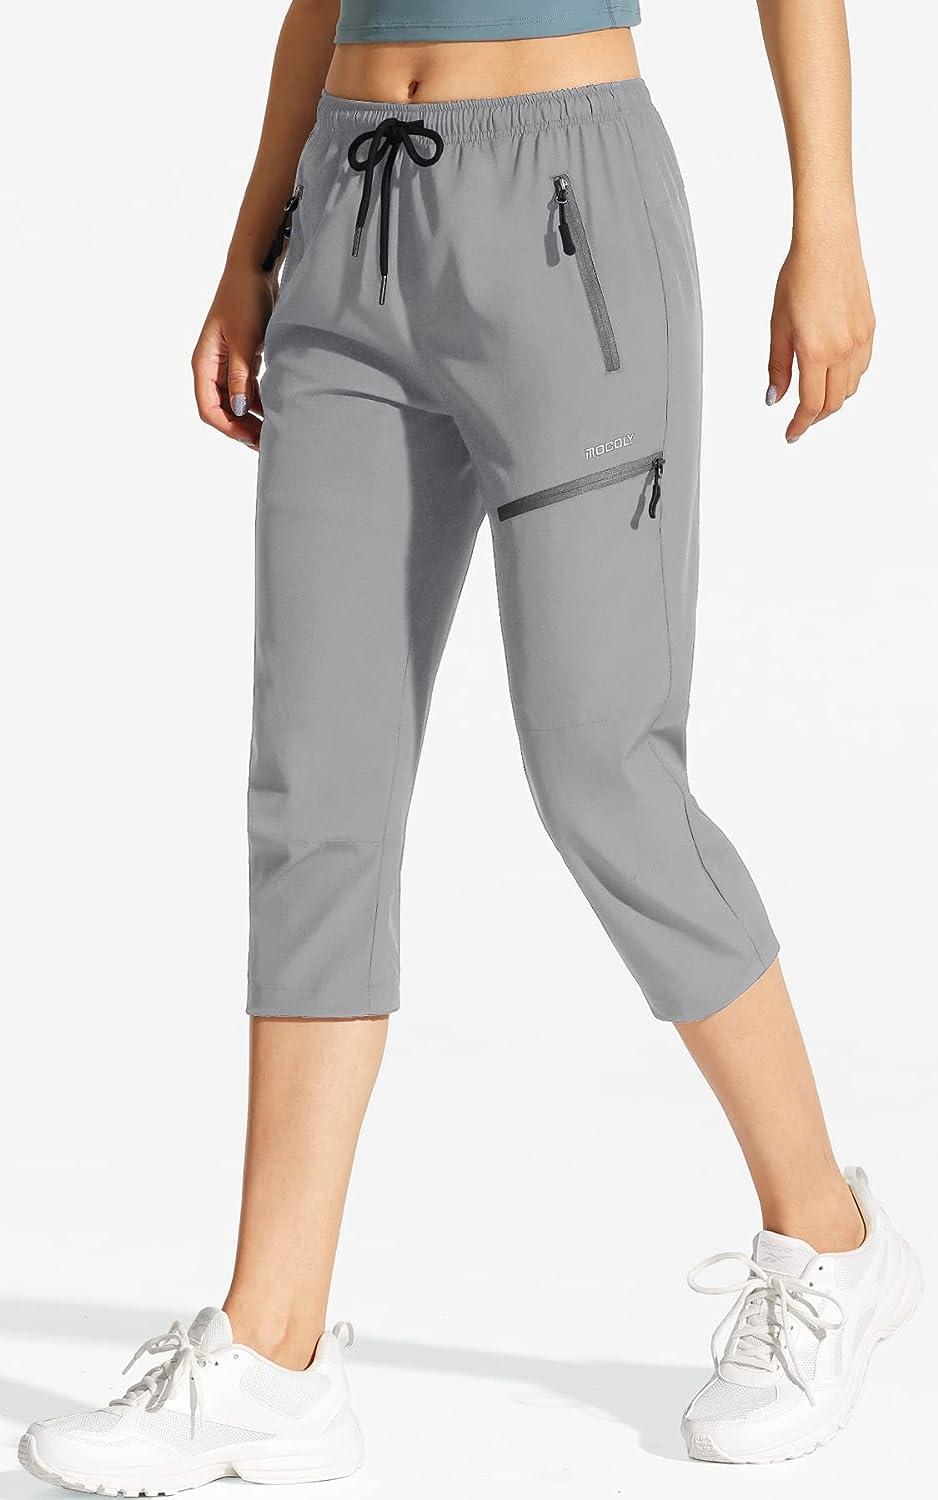 MOCOLY Women's Cargo Hiking Pants Elastic Waist Quick Dry Lightweight  Outdoor Water Resistant UPF 50+ Long Pants Zipper